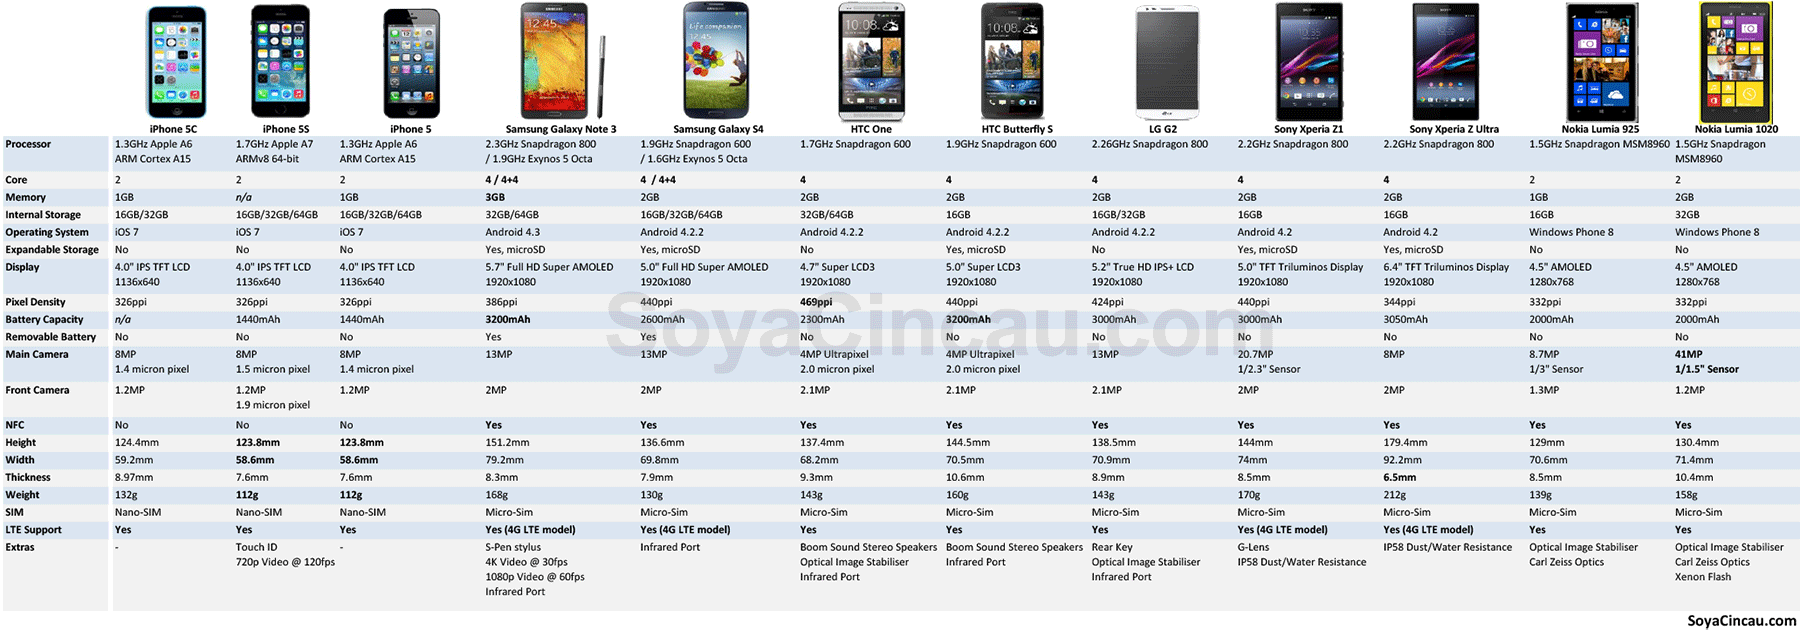 Iphone 5S and 5C comparison table - KLSE malaysia